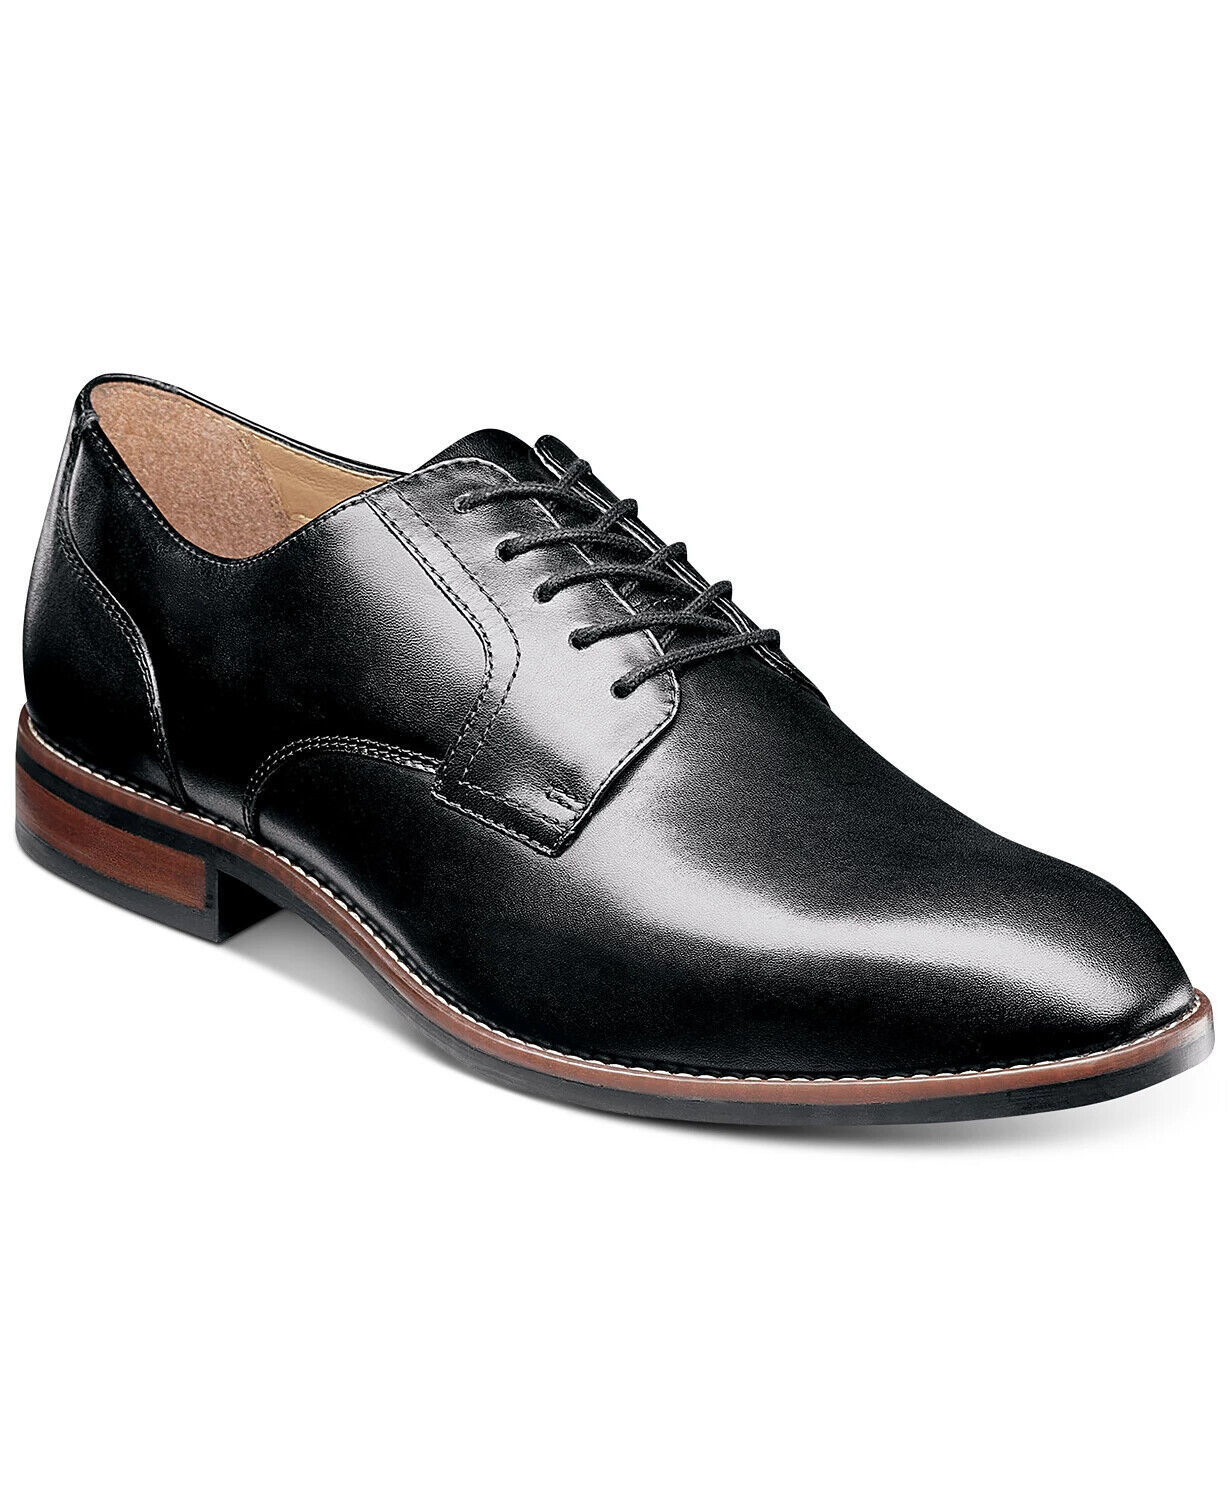 Primary image for Nunn Bush Men's Fifth Ave Flex Lace-up Oxford Plain Toe Shoes, 8 Wide, Black